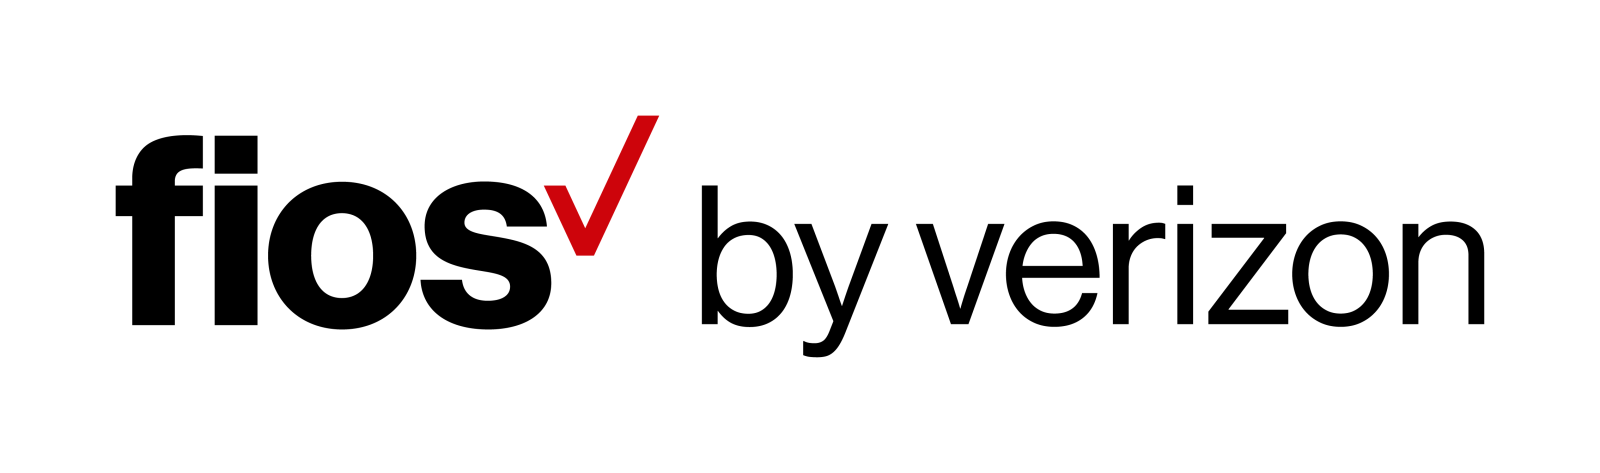 verizon logo png